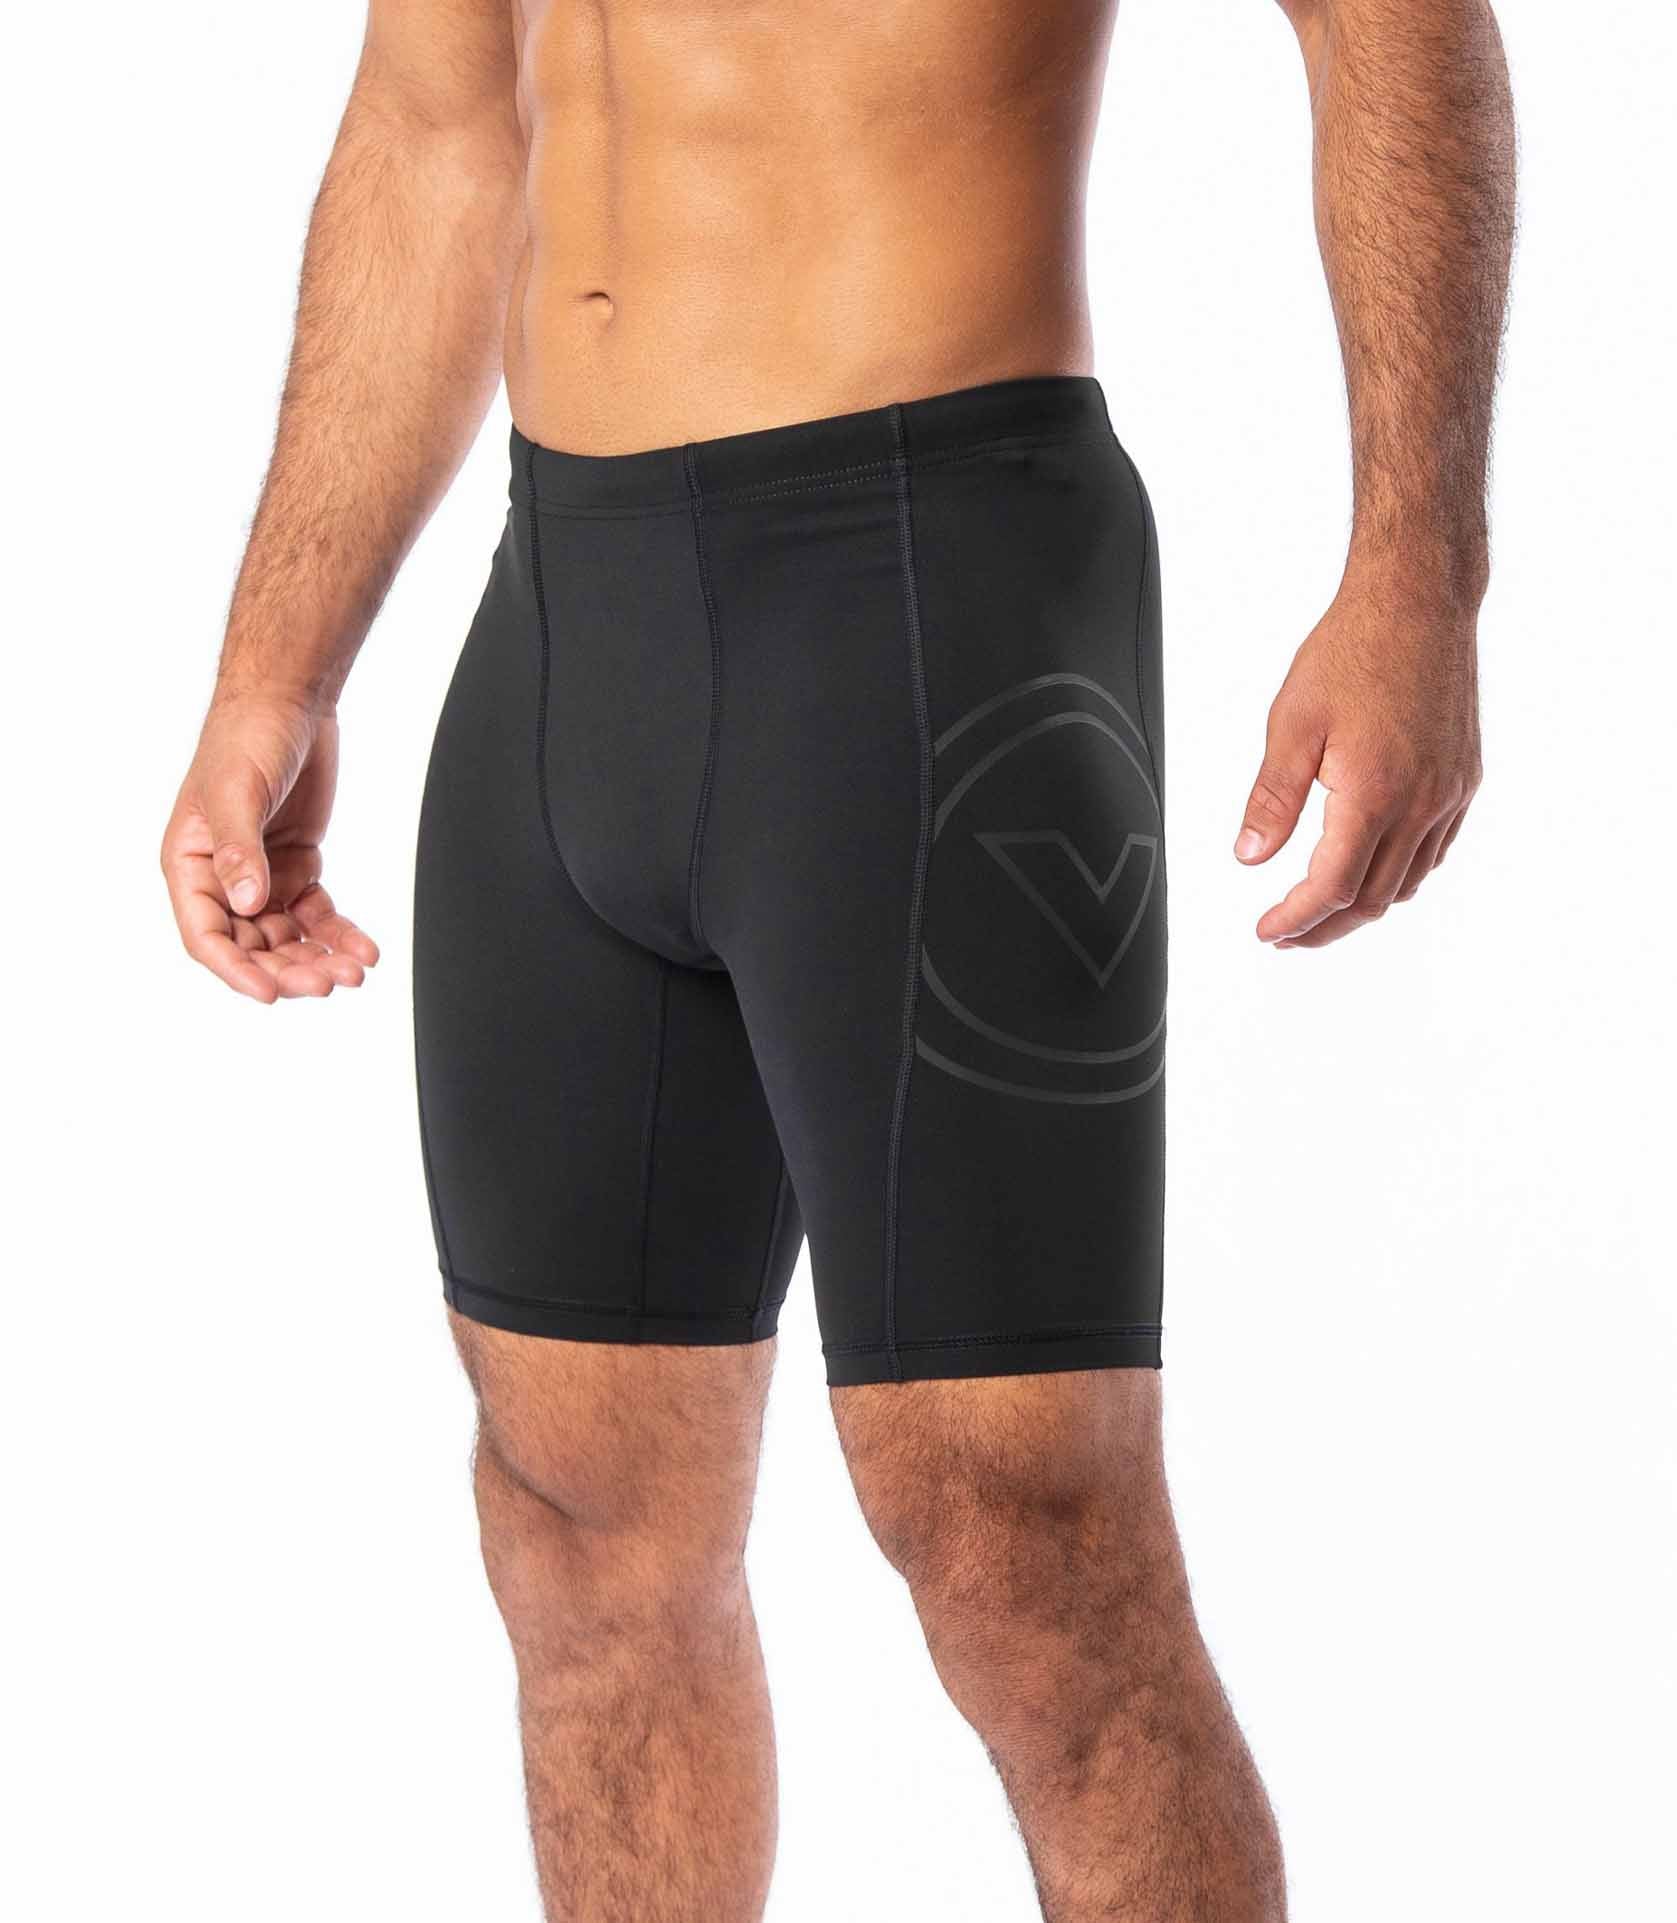 Men's compression shorts ⇒ Buy compression shorts for men HERE!